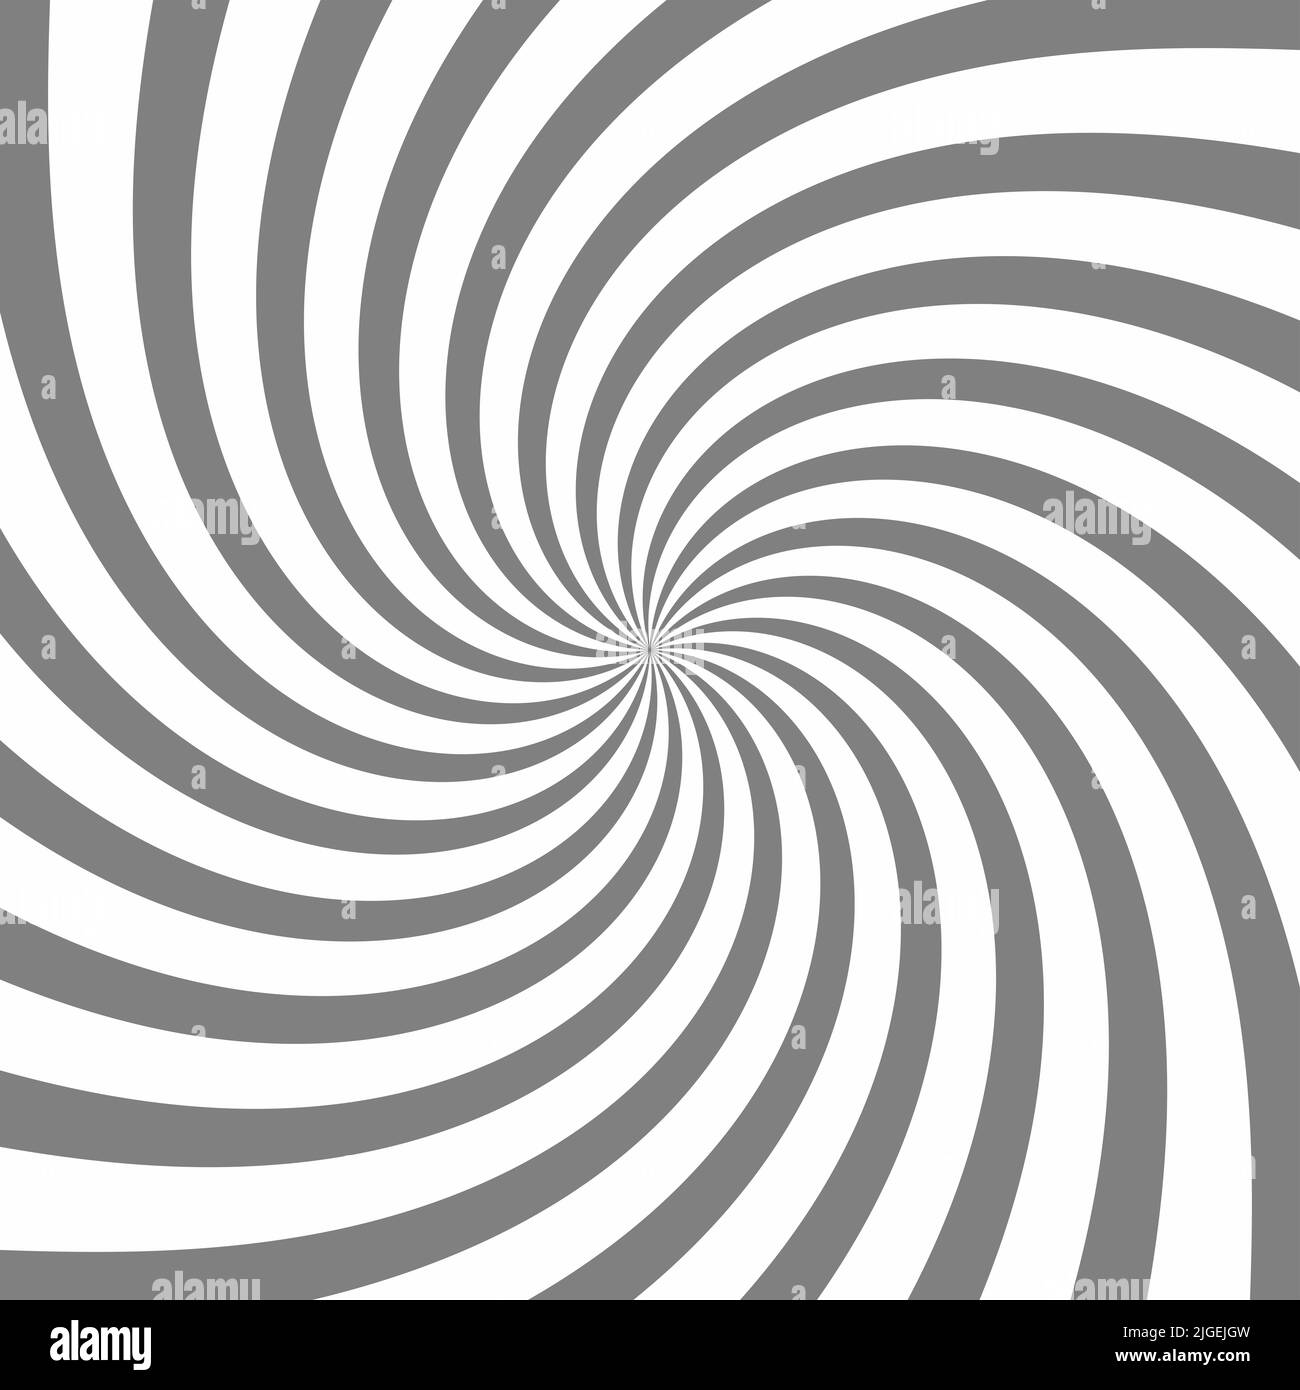 A black and white spiral optical illusion background. Stock illustration, monochrome Stock Photo